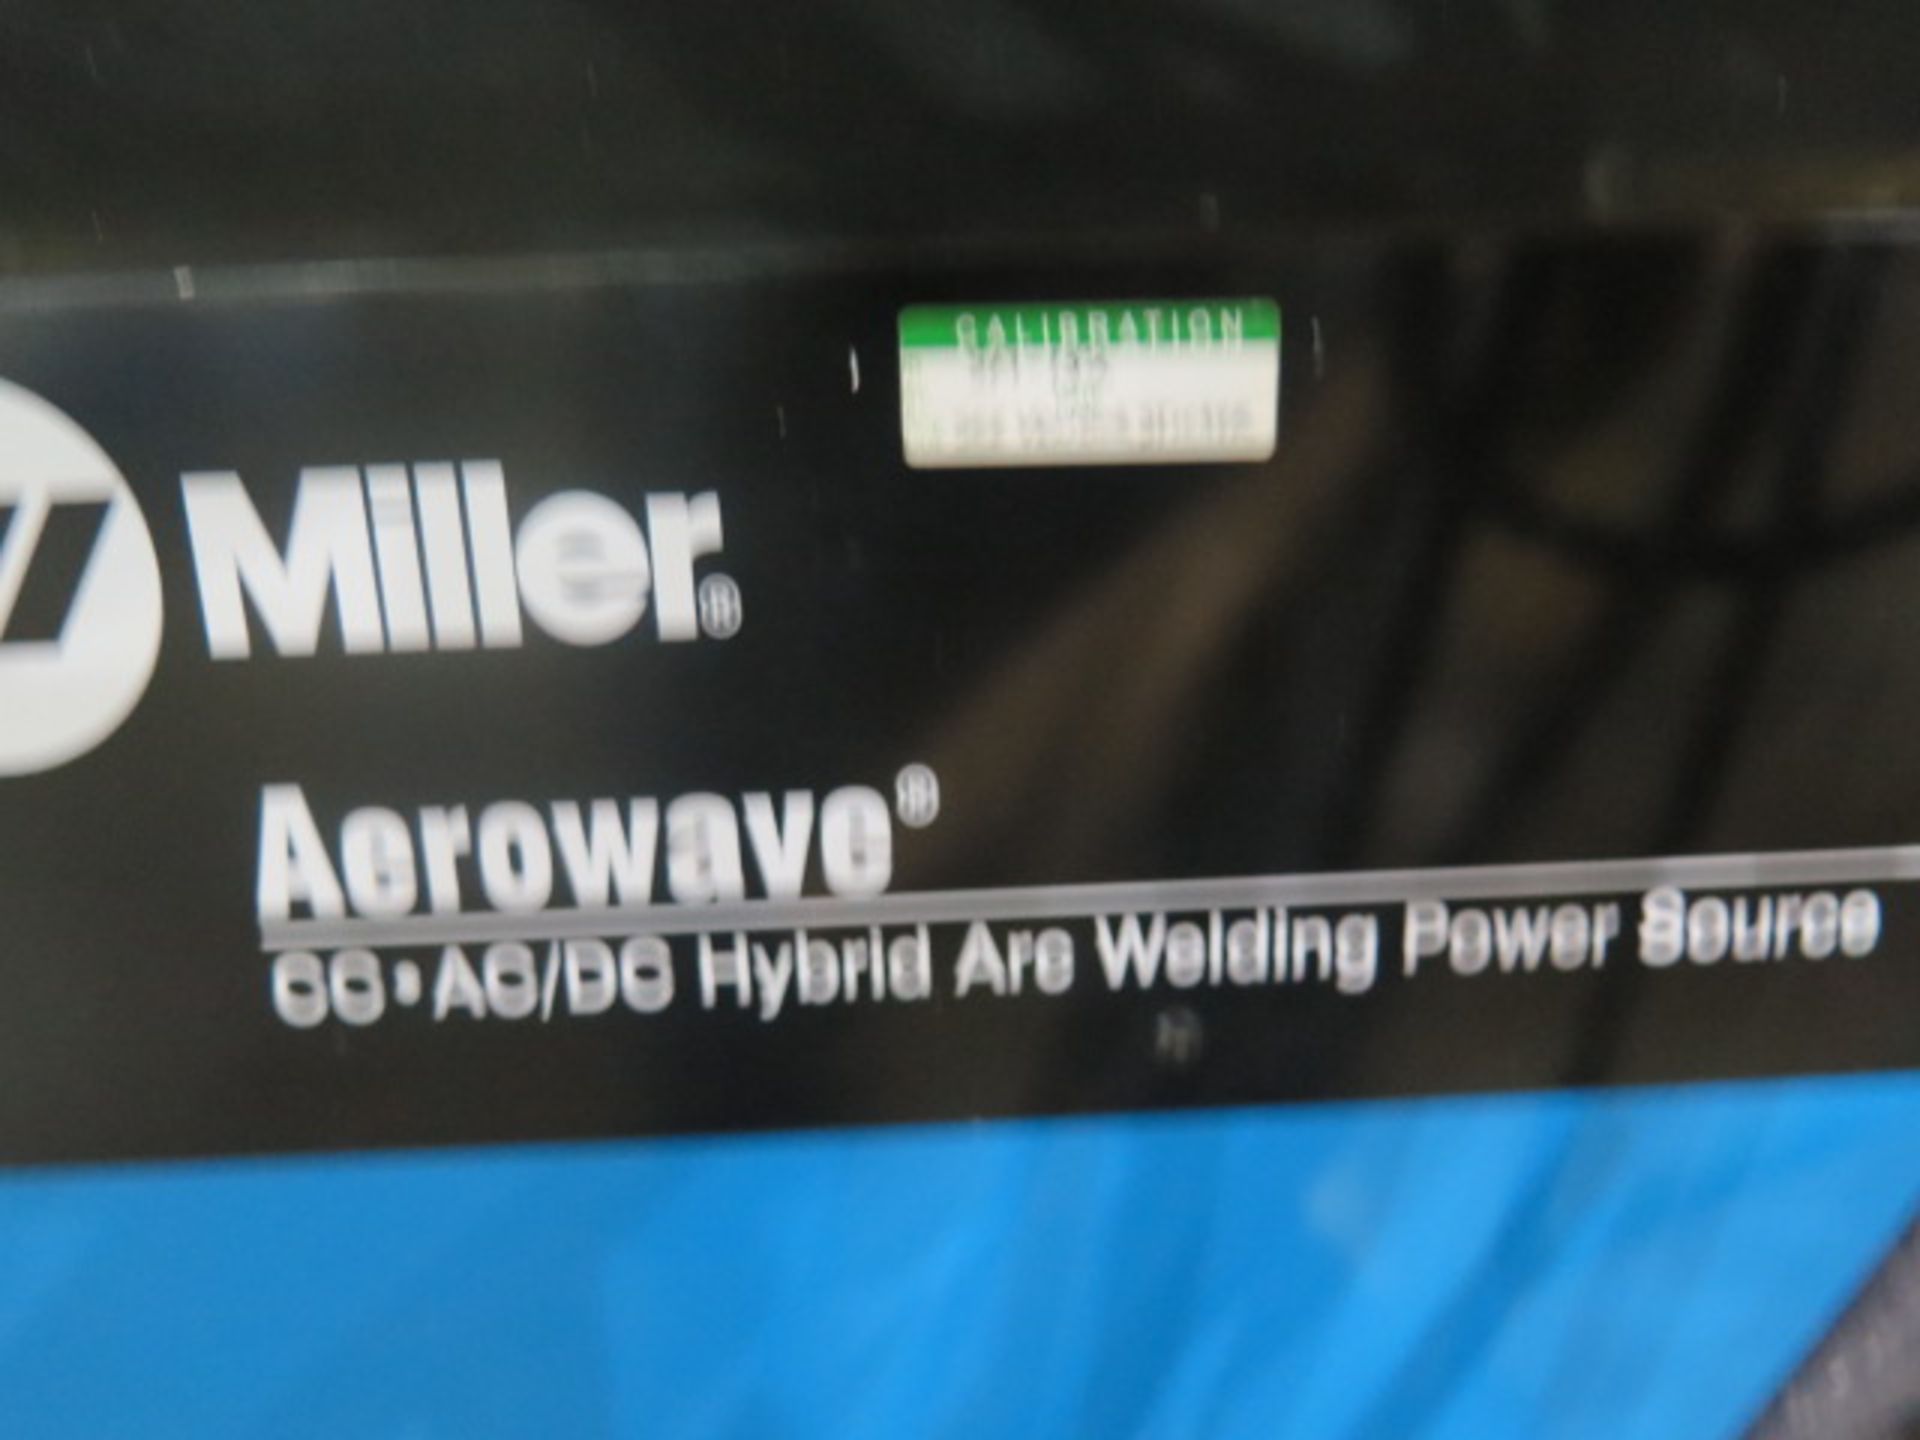 Miller Aerowave 500 Amp CC-AC/DC Arc Welding Source s/n KK099716 w/ Coolmate-3 Cooler, SOLD AS IS - Image 8 of 8